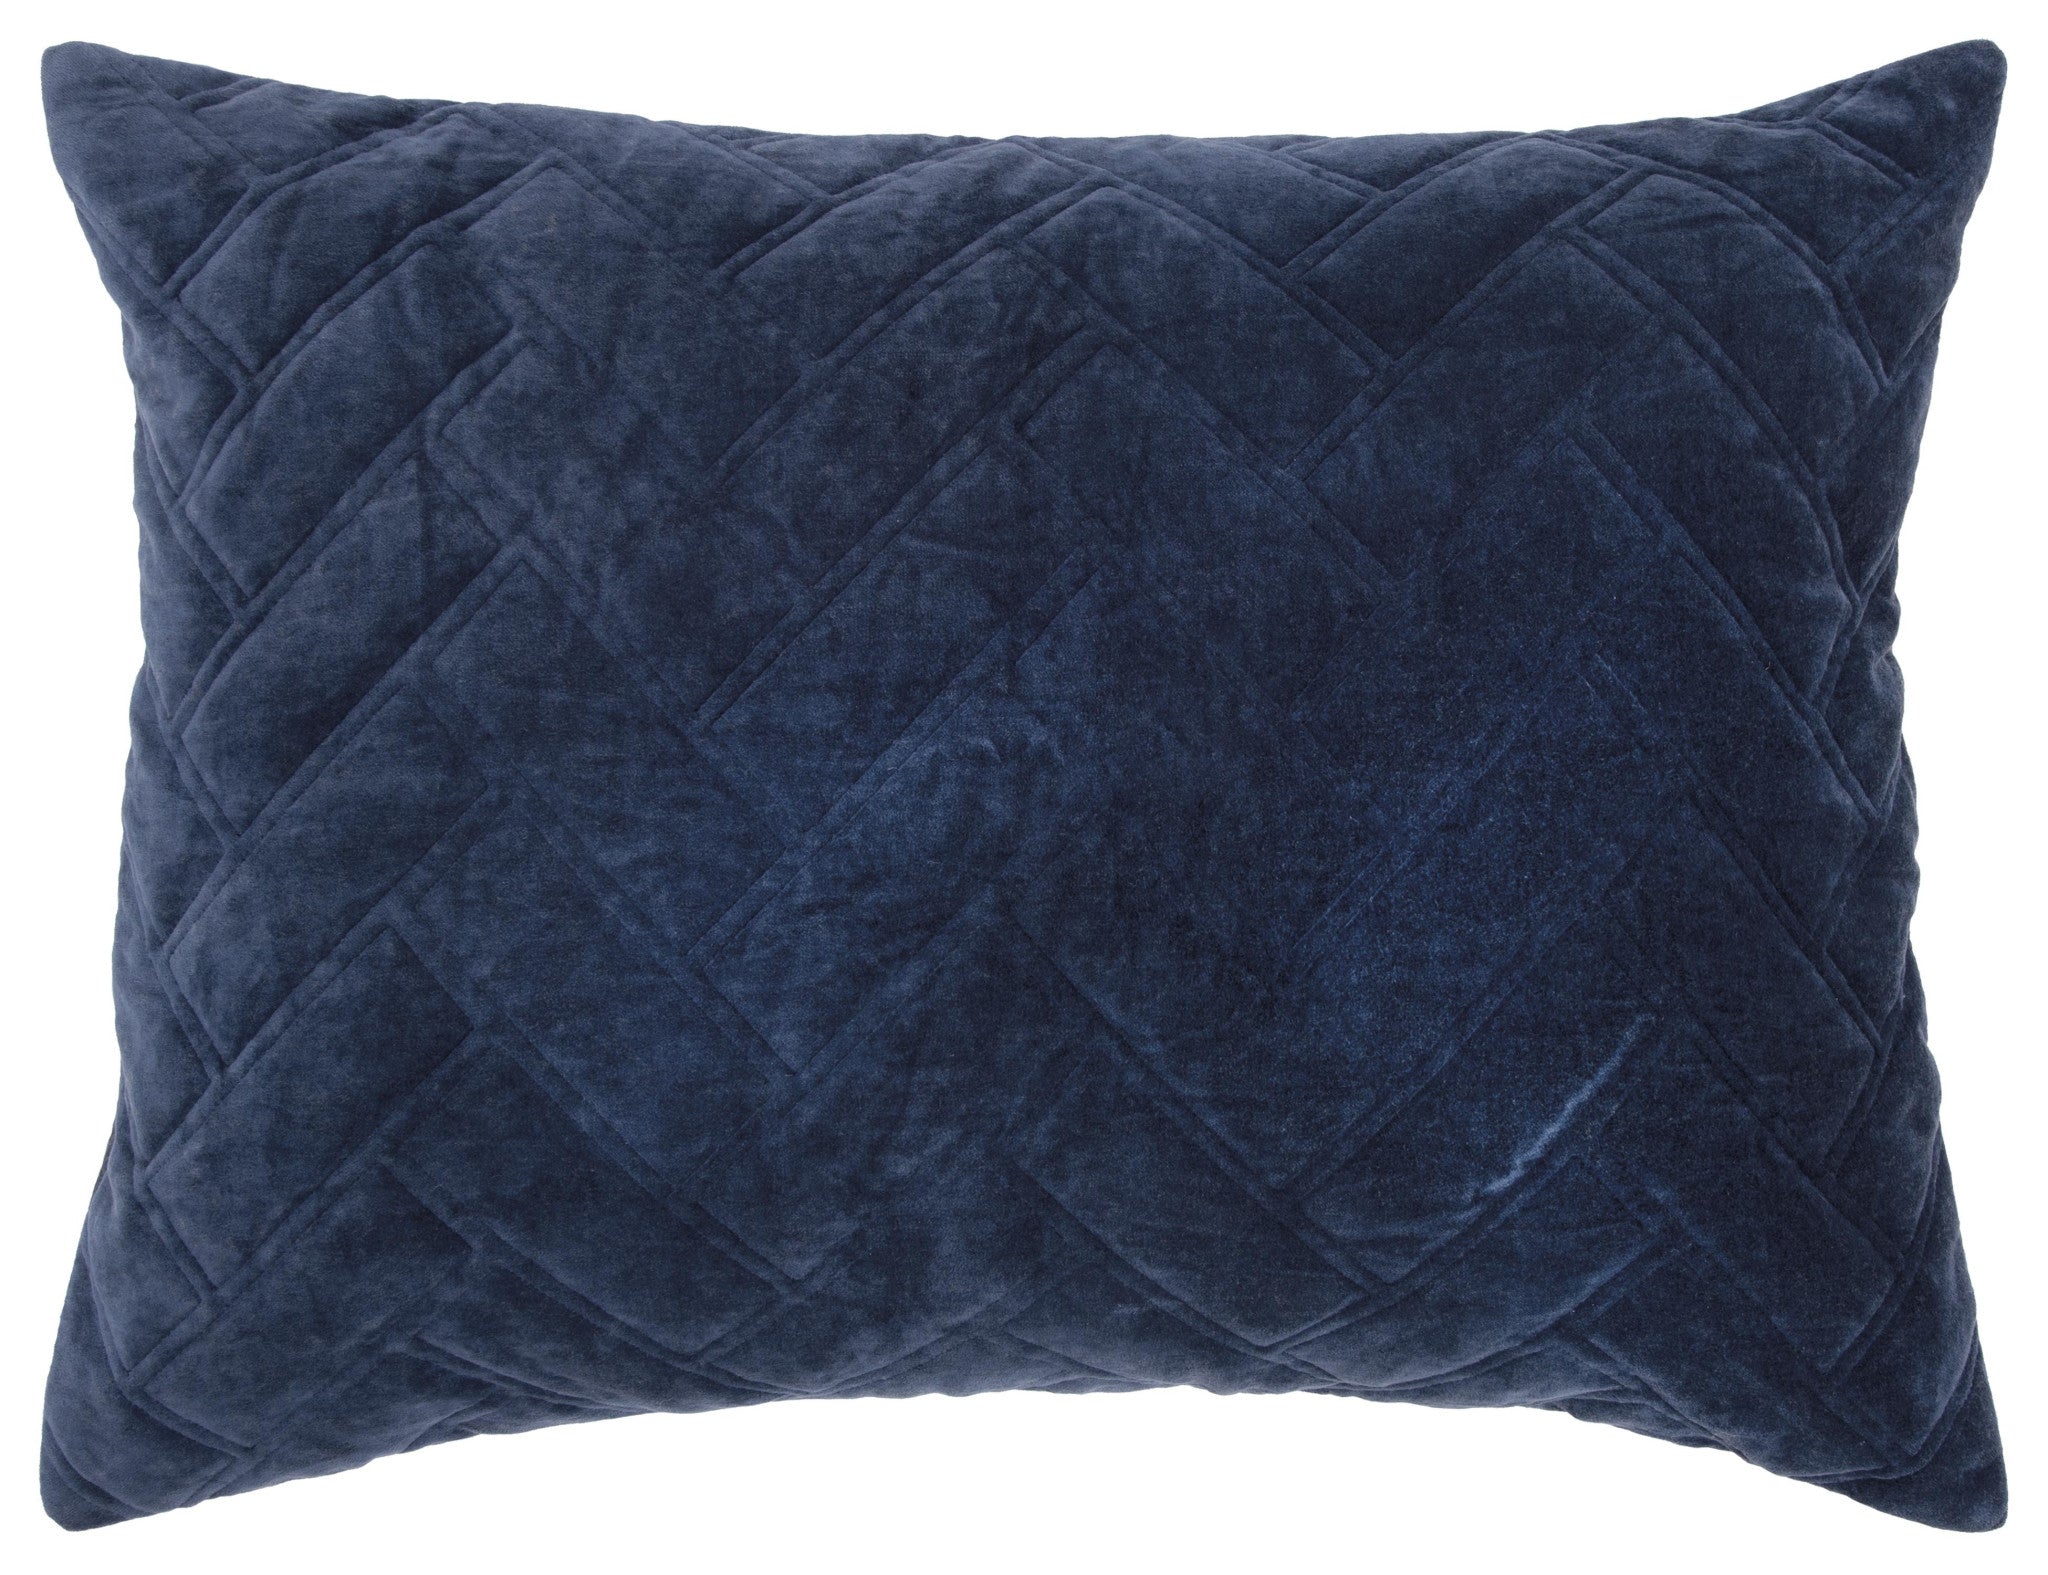 Indigo Queen 100% Cotton 300 Thread Count Dry Clean Only Down Alternative Comforter